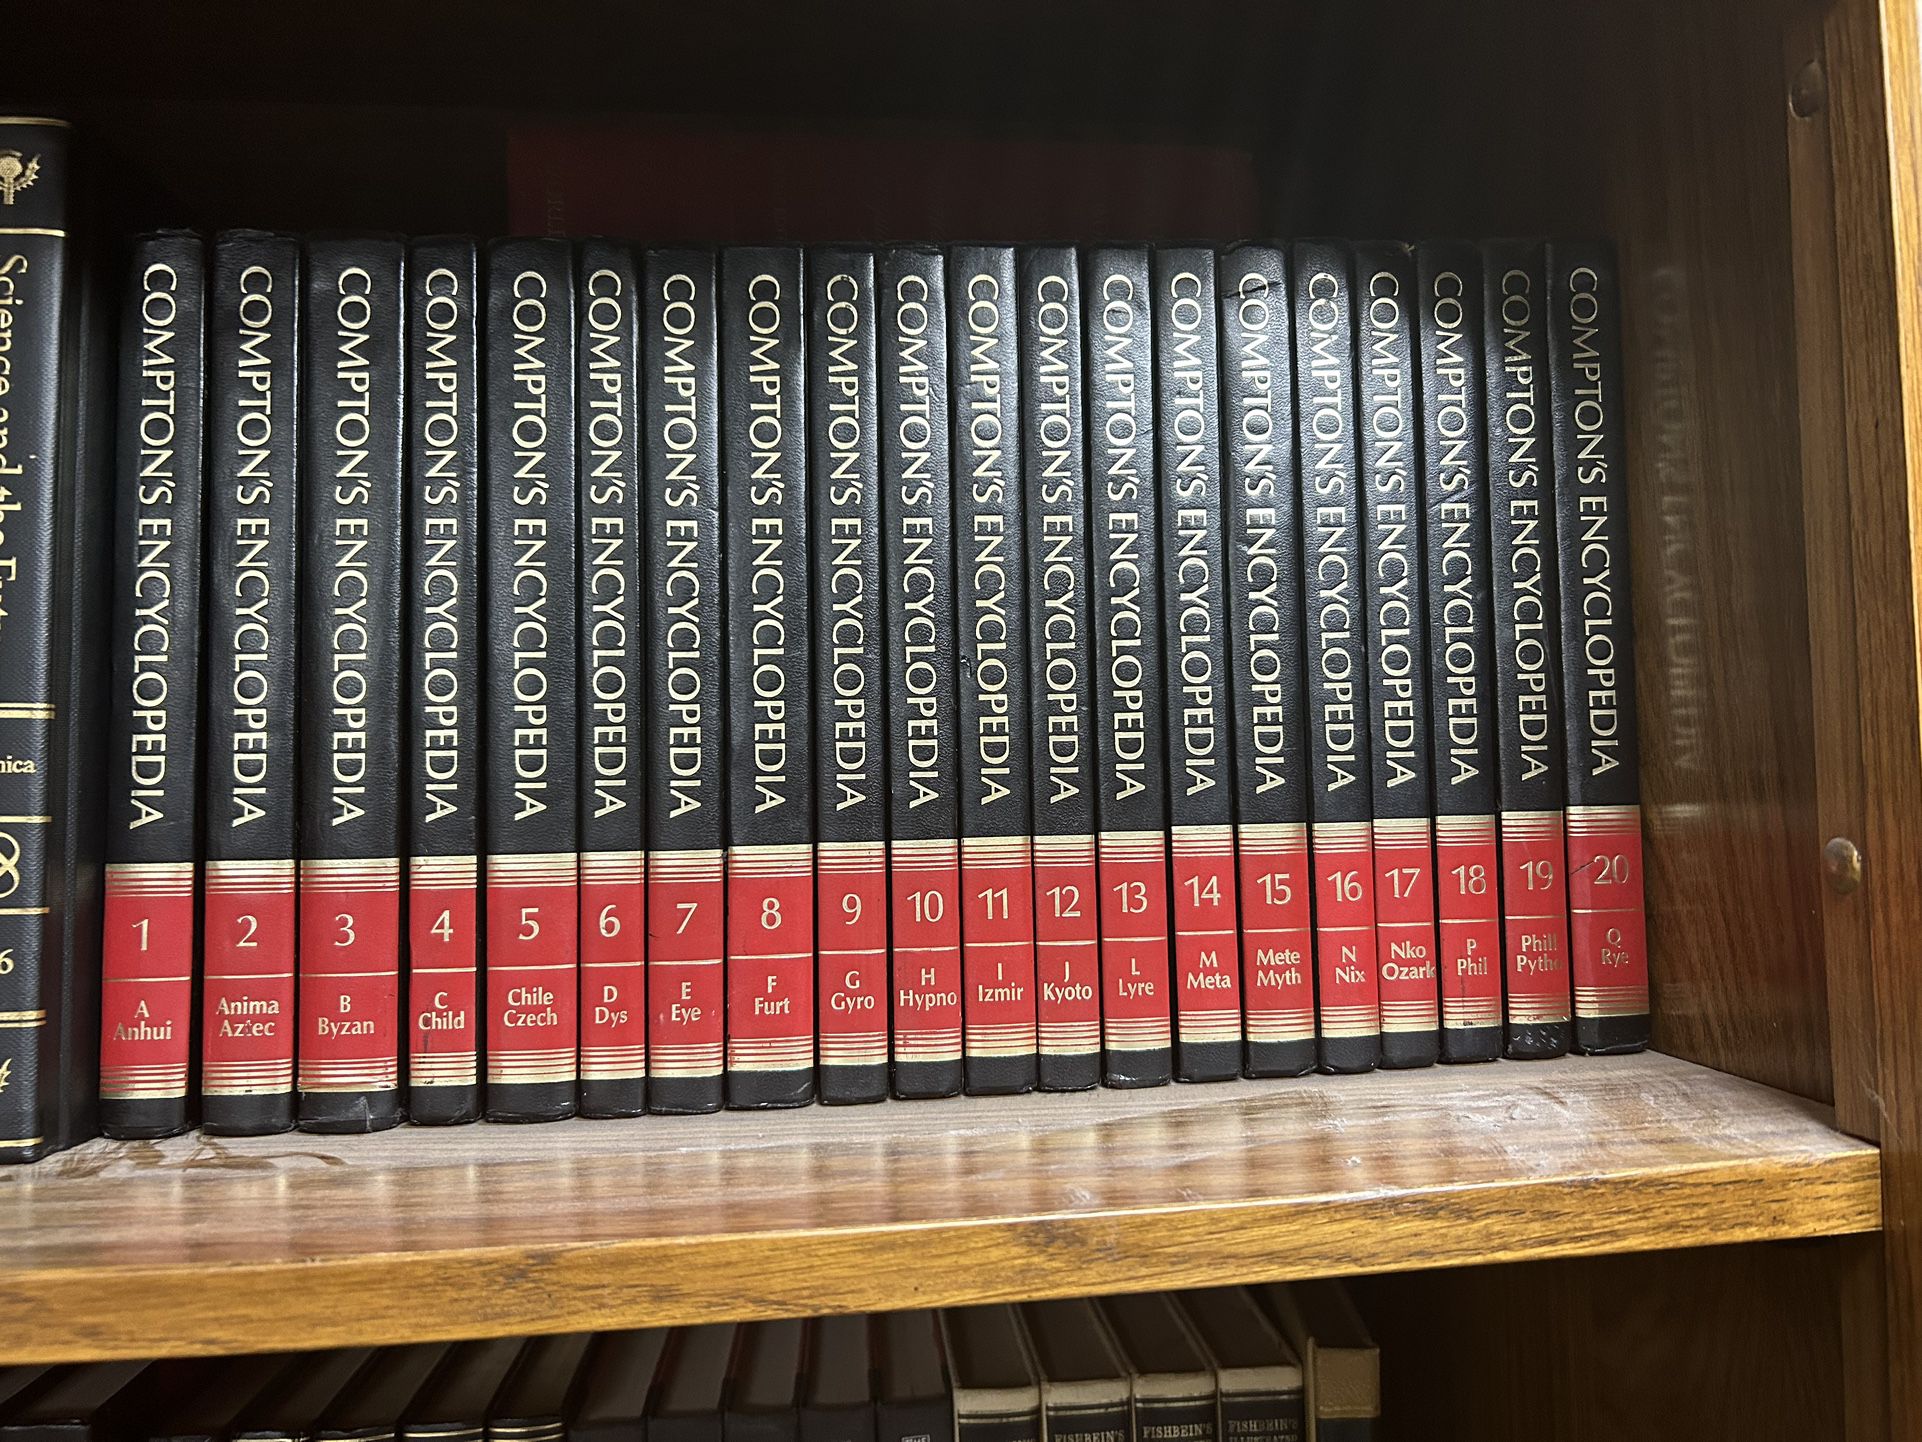 Britannica Encyclopedias (multiple Full Collections)